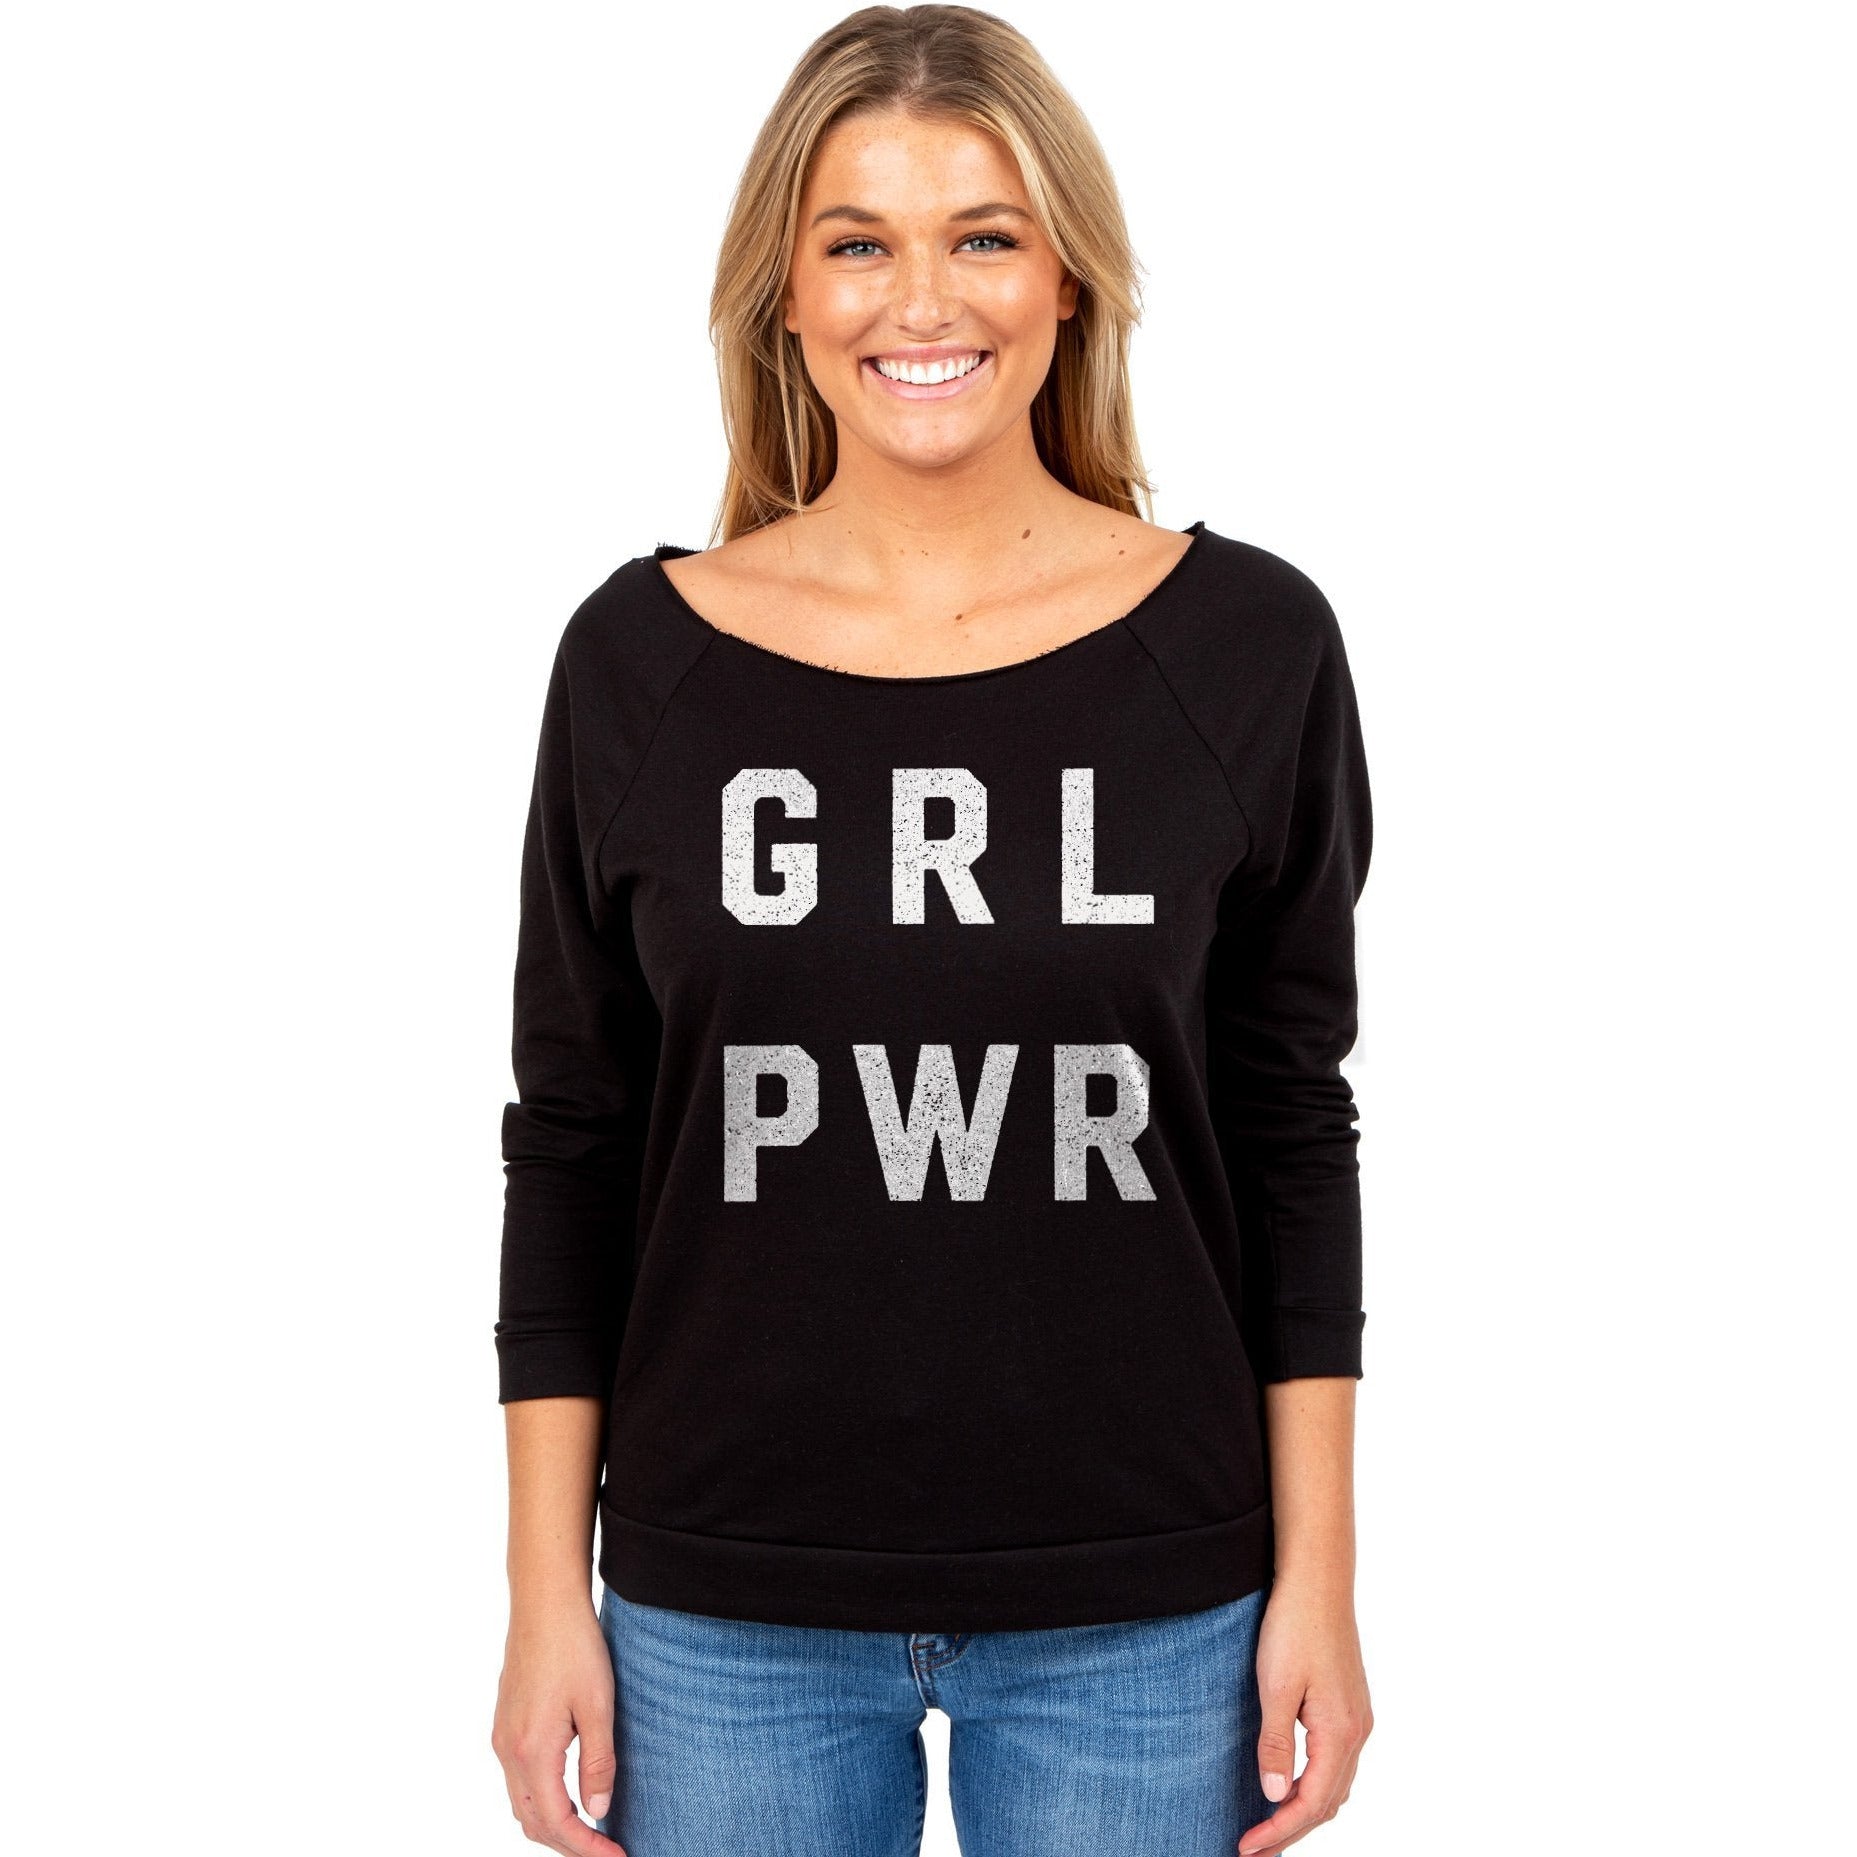 GRL PWR Girl Power Women's Graphic Printed Lightweight Slouchy 3/4 Sleeves Sweatshirt Sport Black